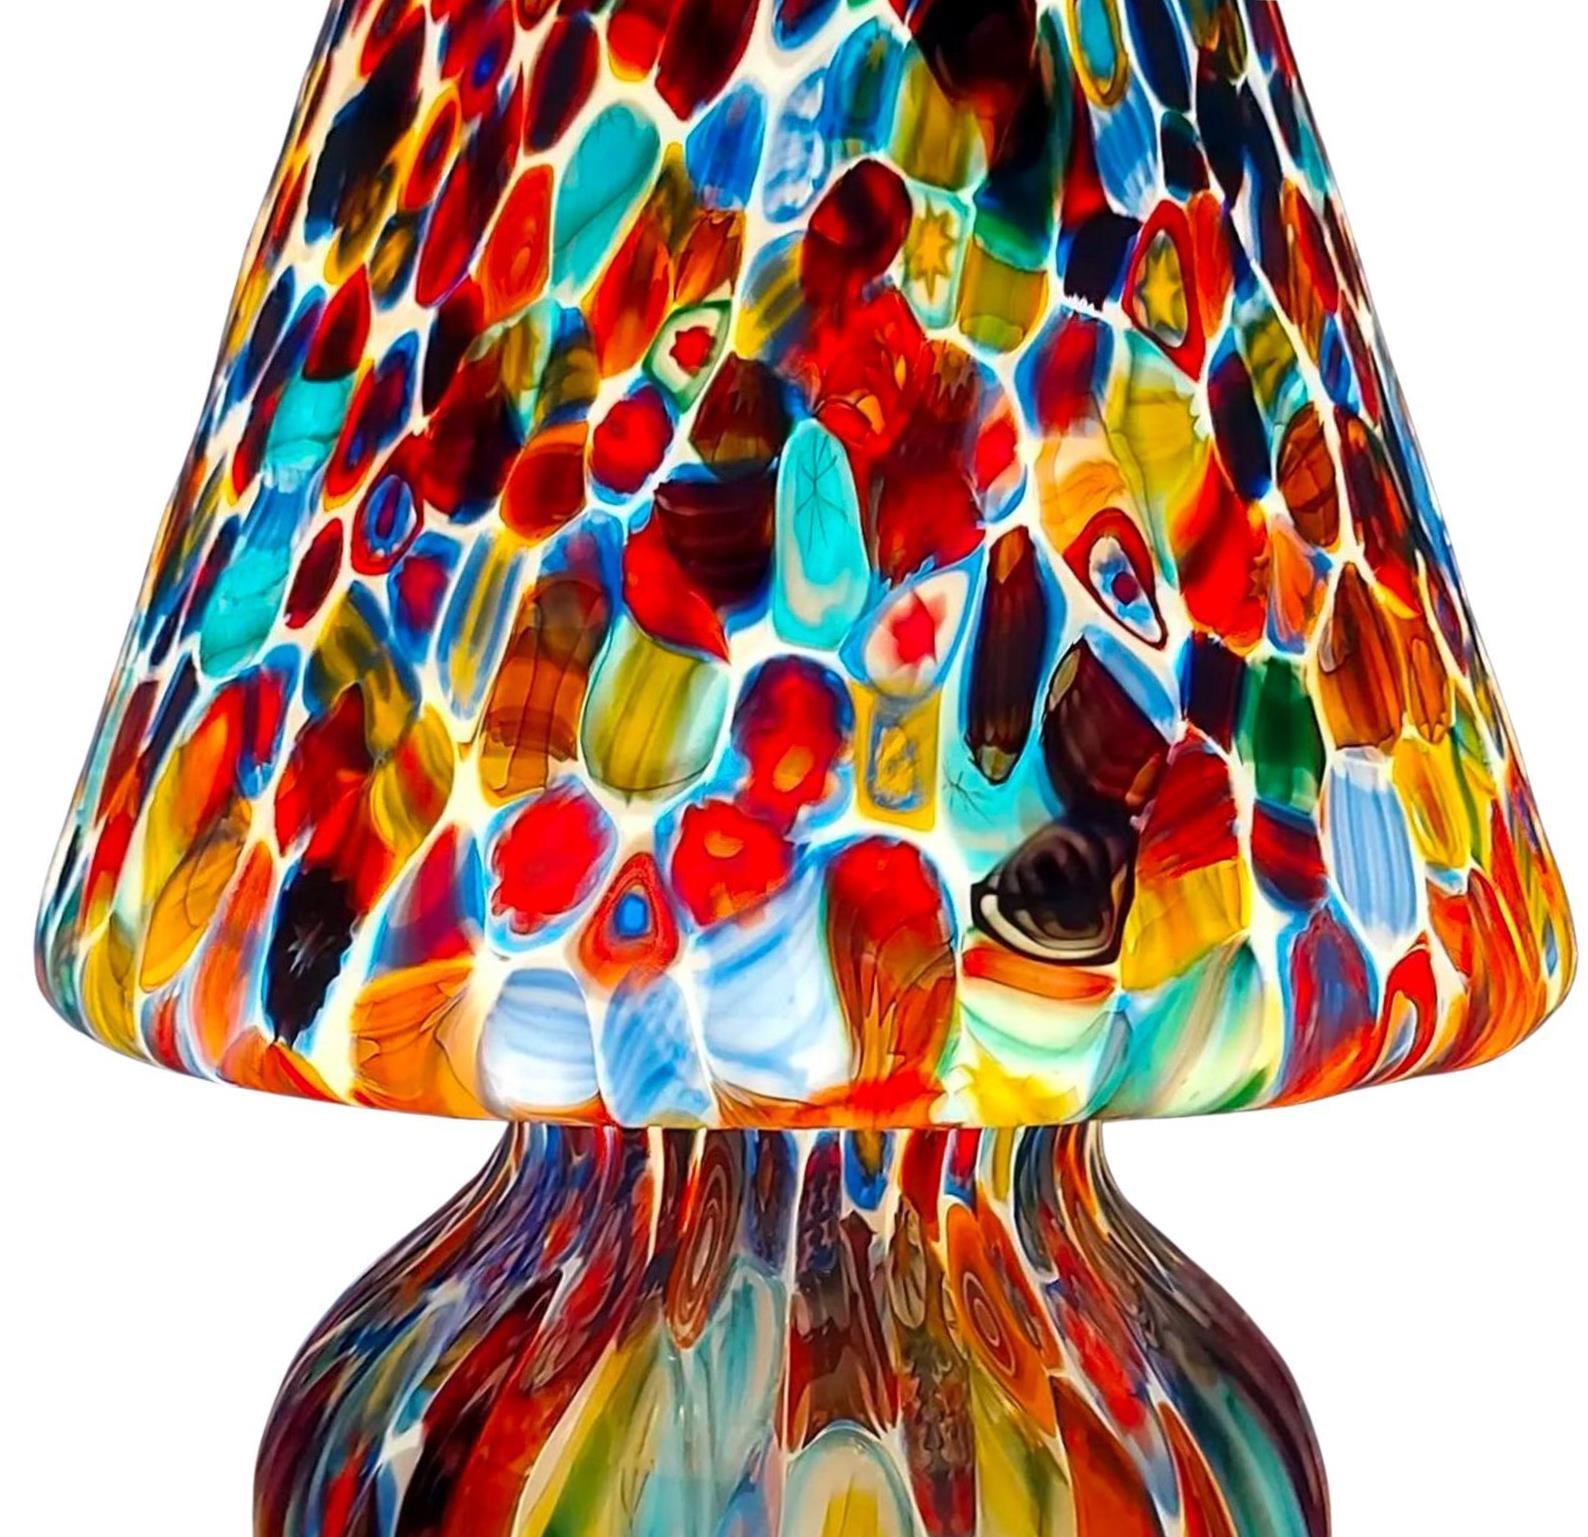 Murano Glass Pair of Big Hancrafted Murano Table Lamps Murrine Millefiori Decor, Italy 2000's For Sale